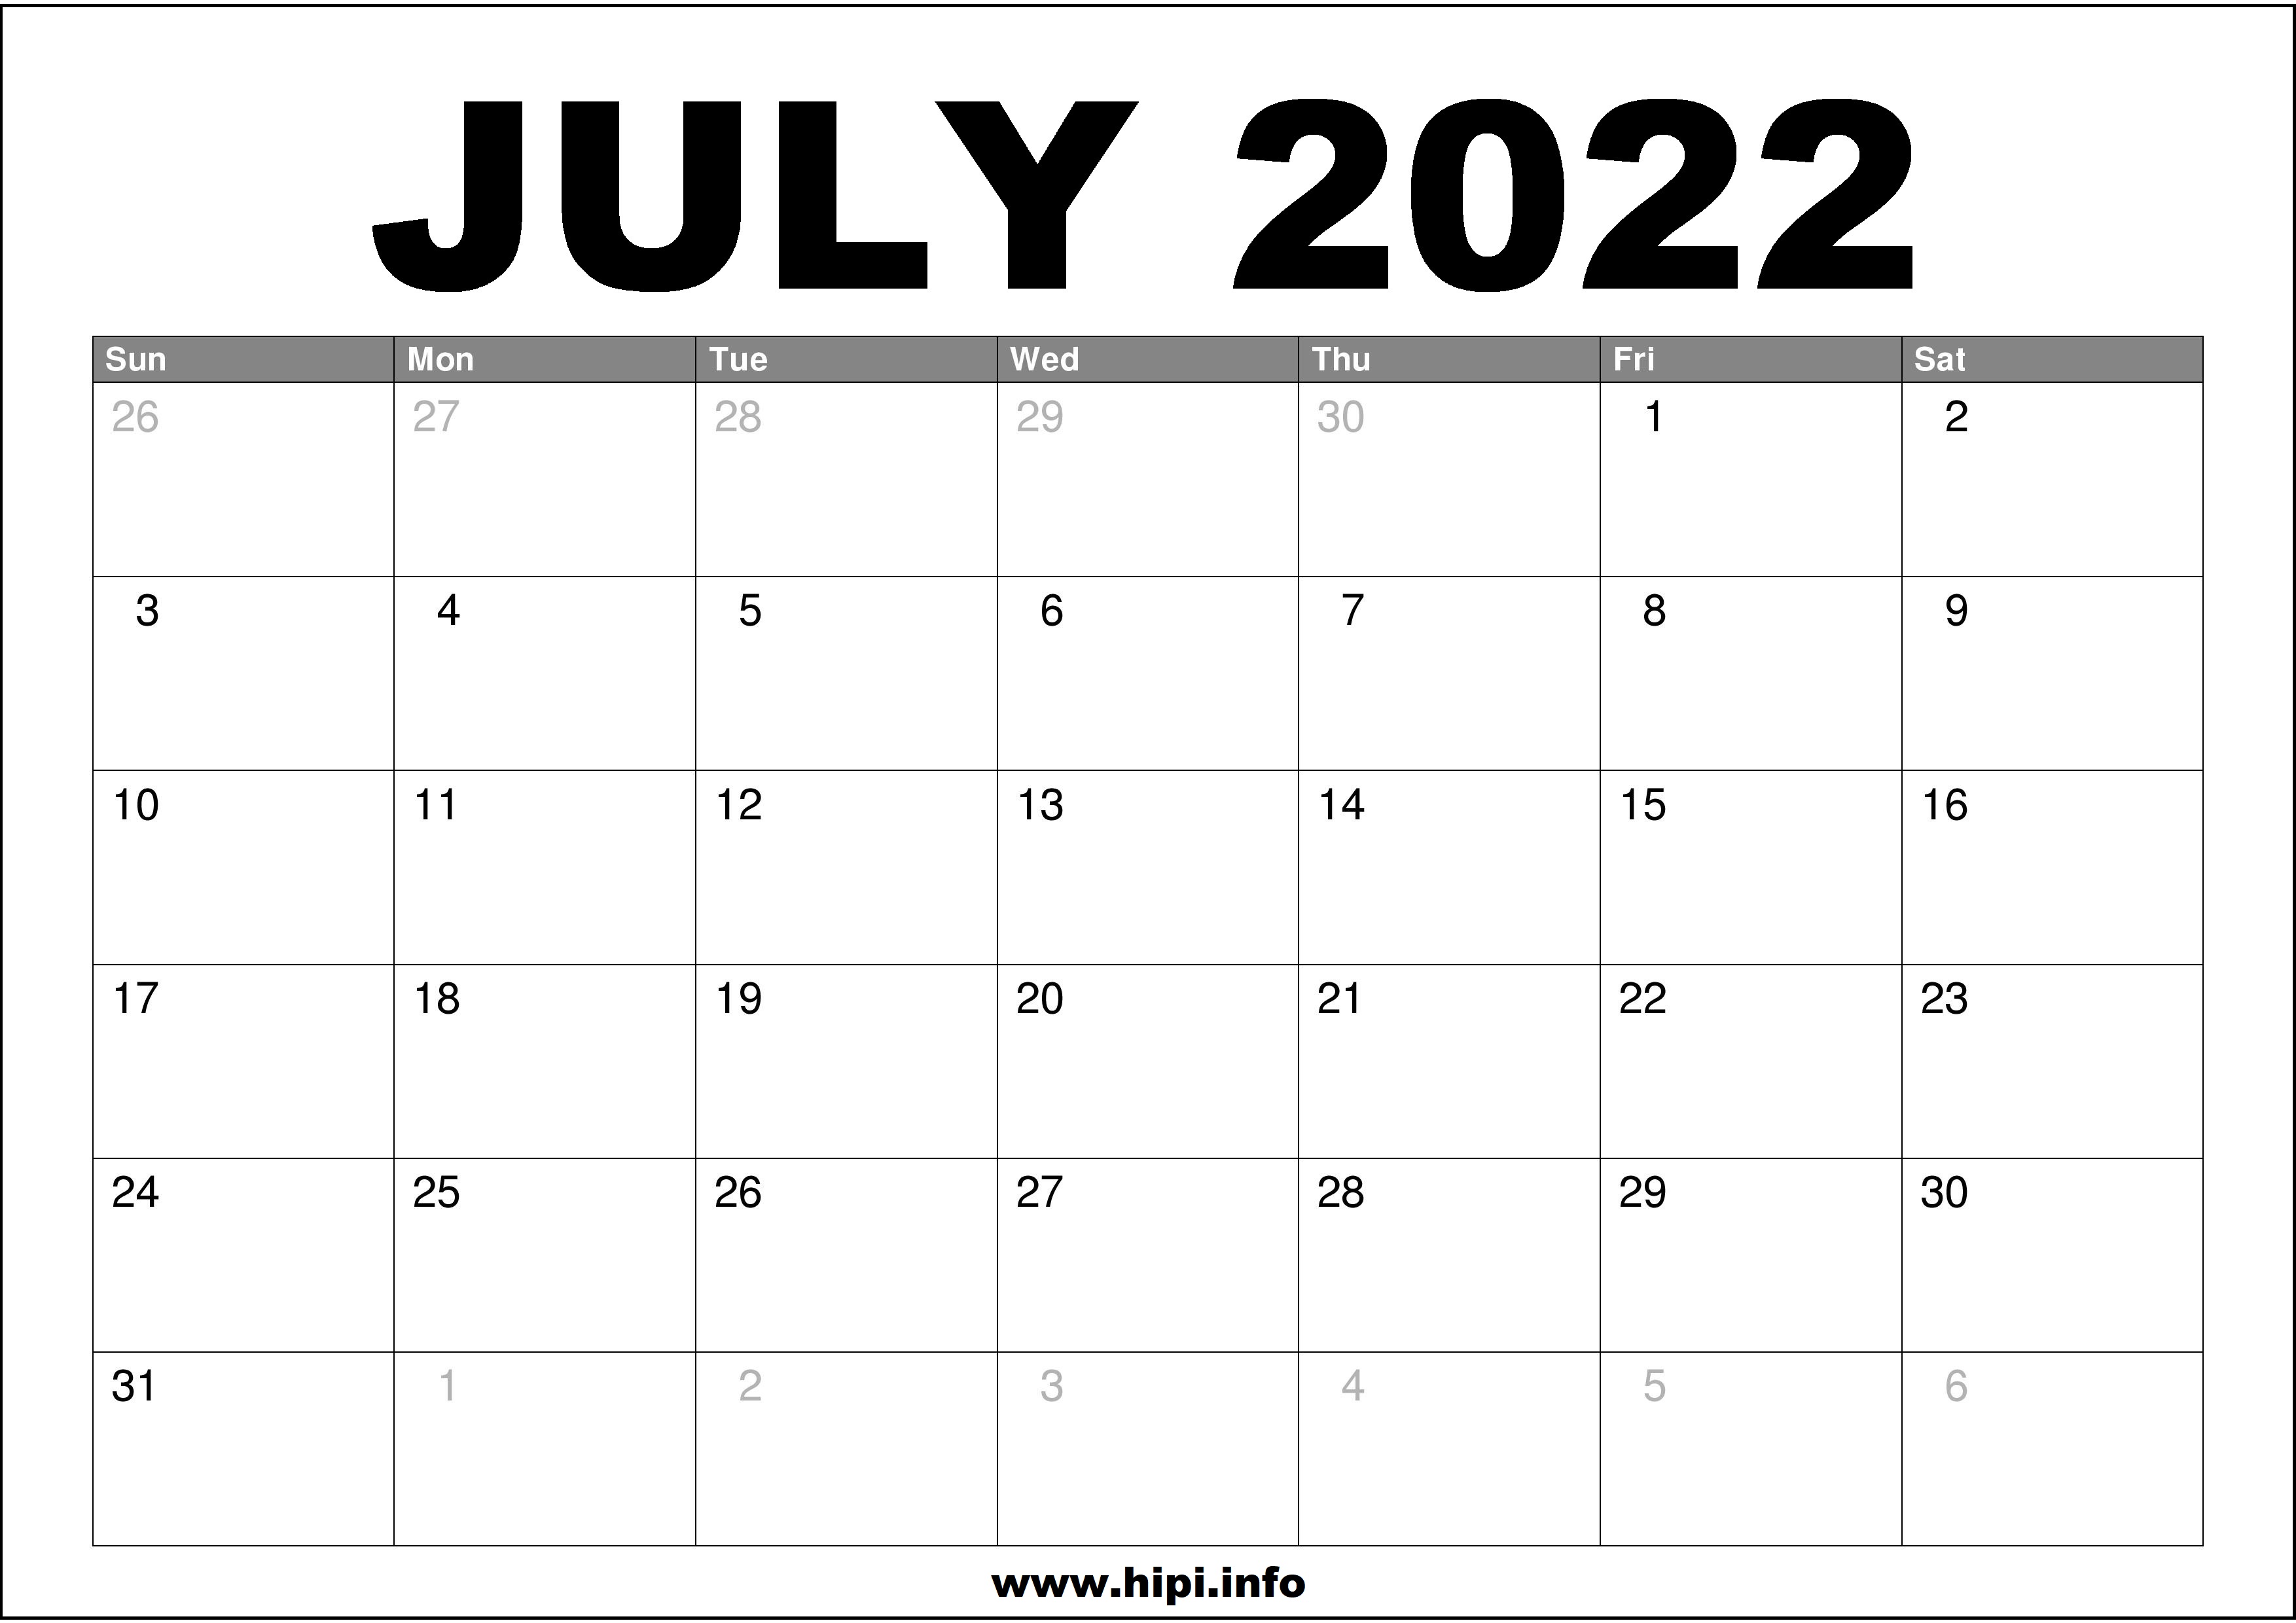 Free Calendar July 2022 July 2022 Calendar Printable Free - Hipi.info | Calendars Printable Free